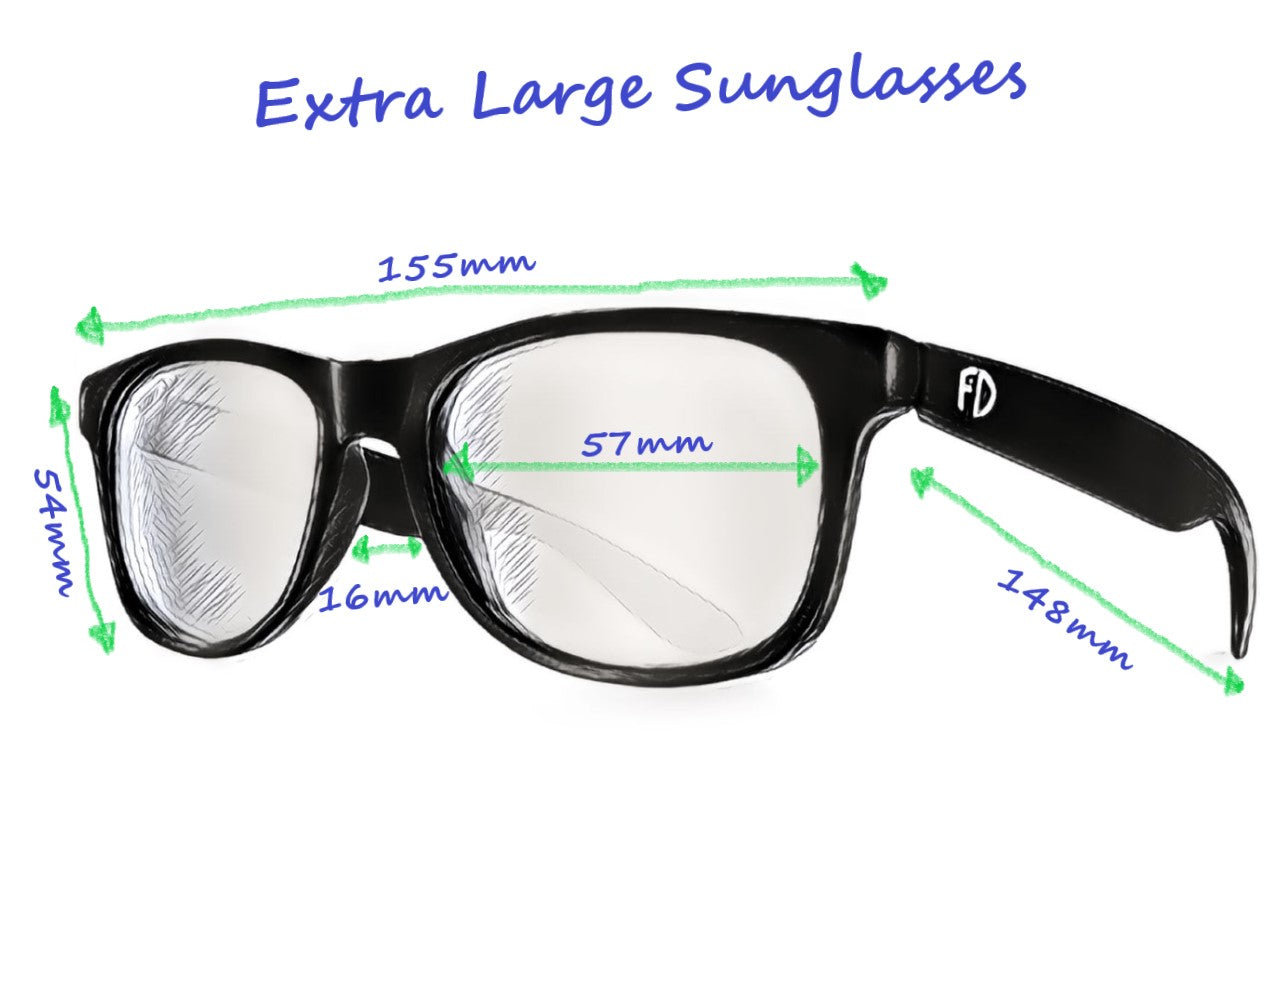 Extra Large Sunglasses that Fit Over Prescription Glasses